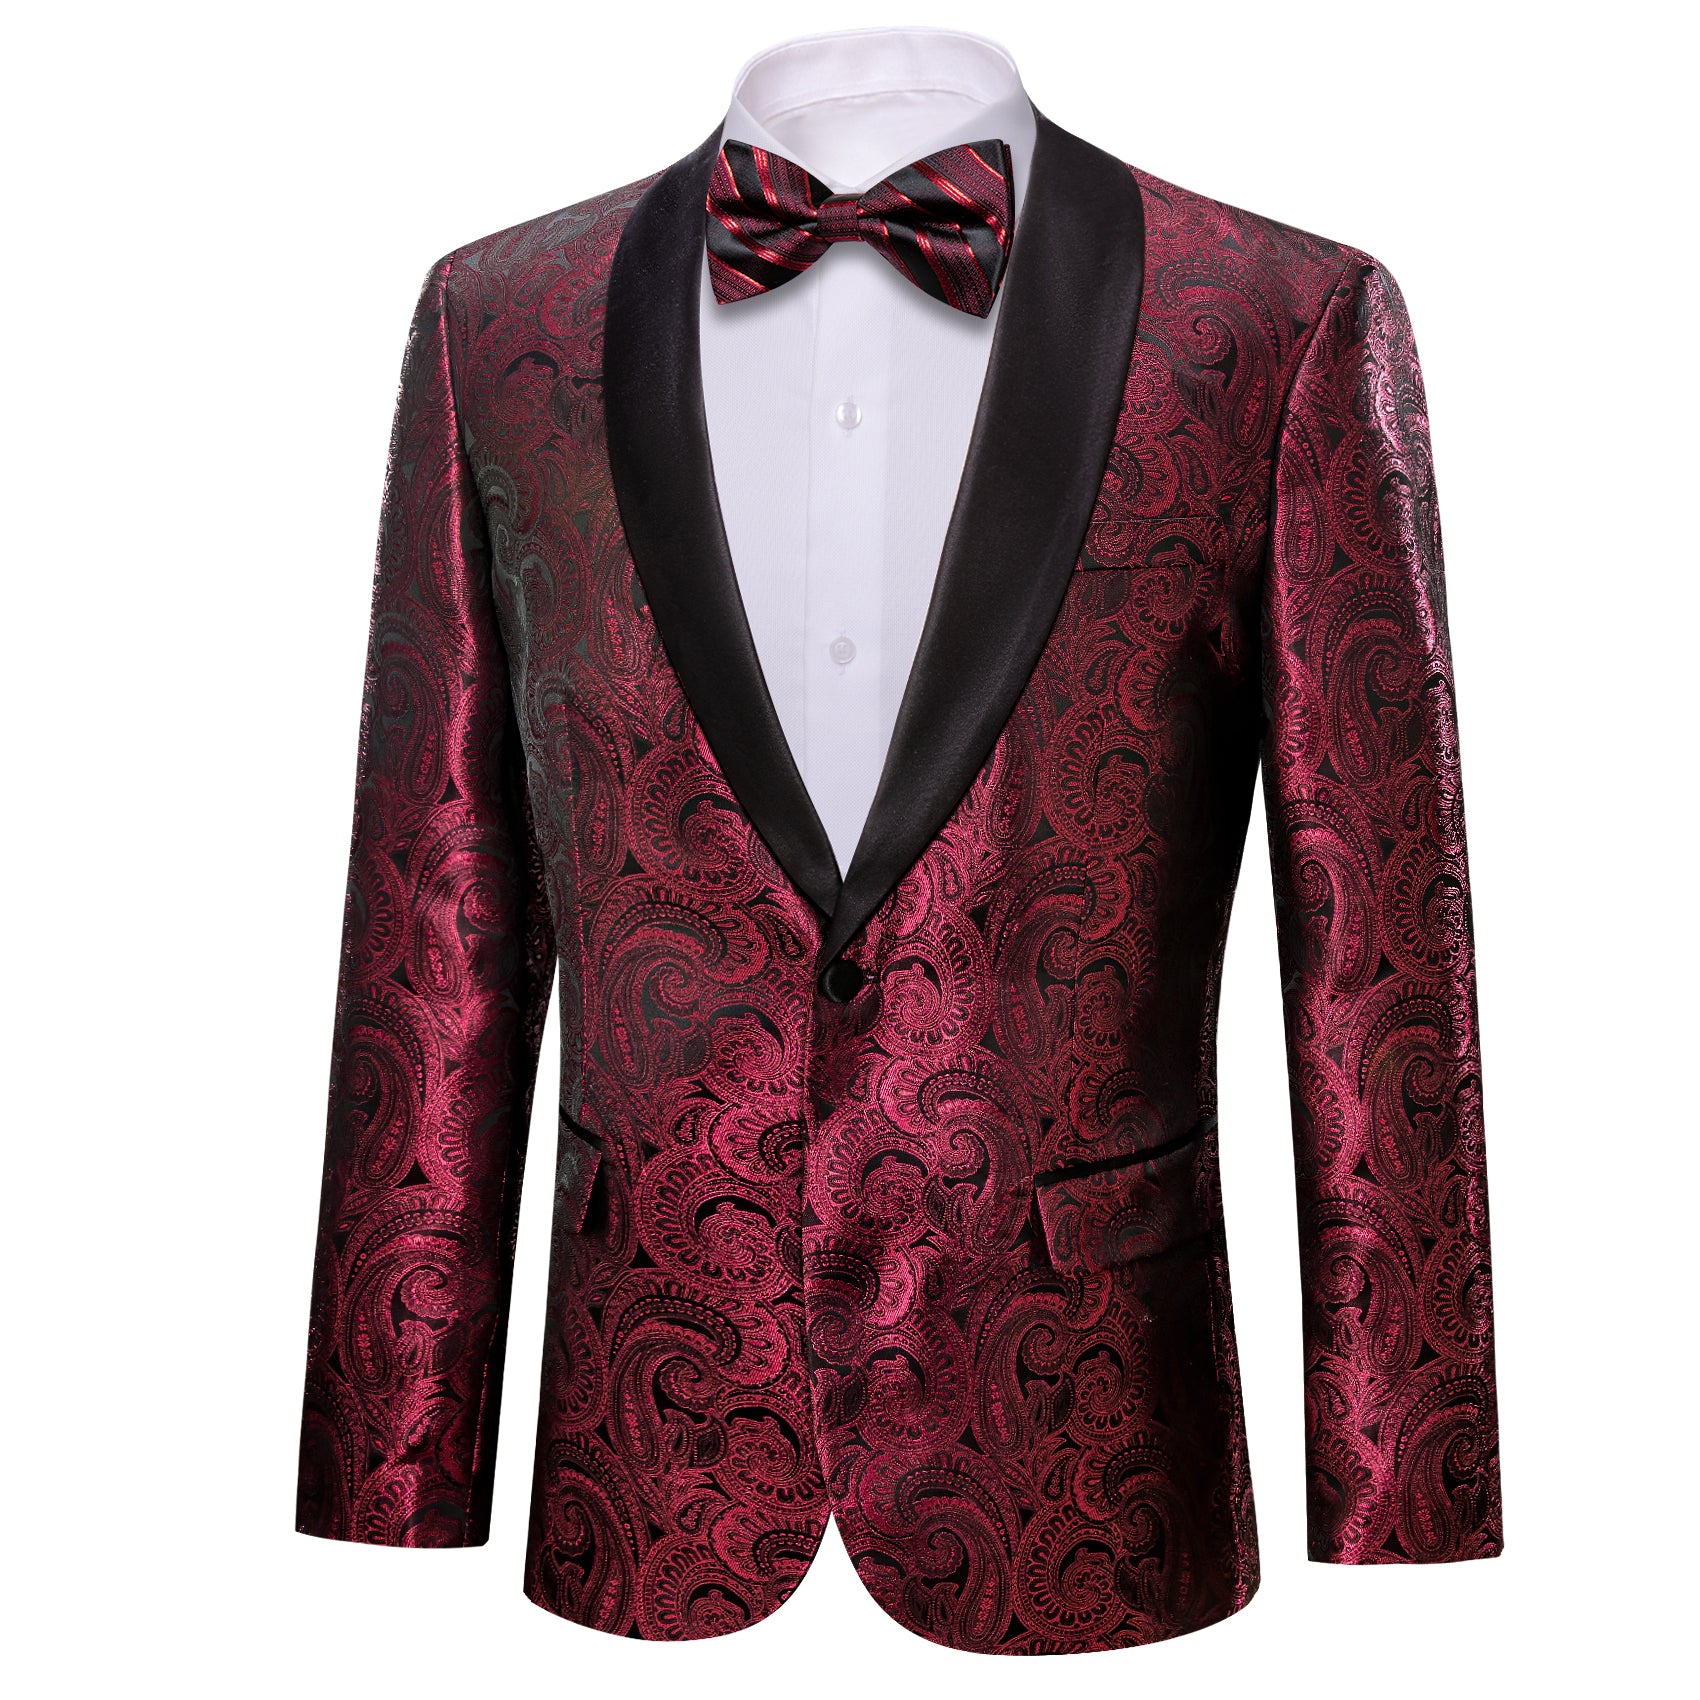 Men's Dress Party Dark Red Floral Suit Jacket Slim One Button Stylish Blazer